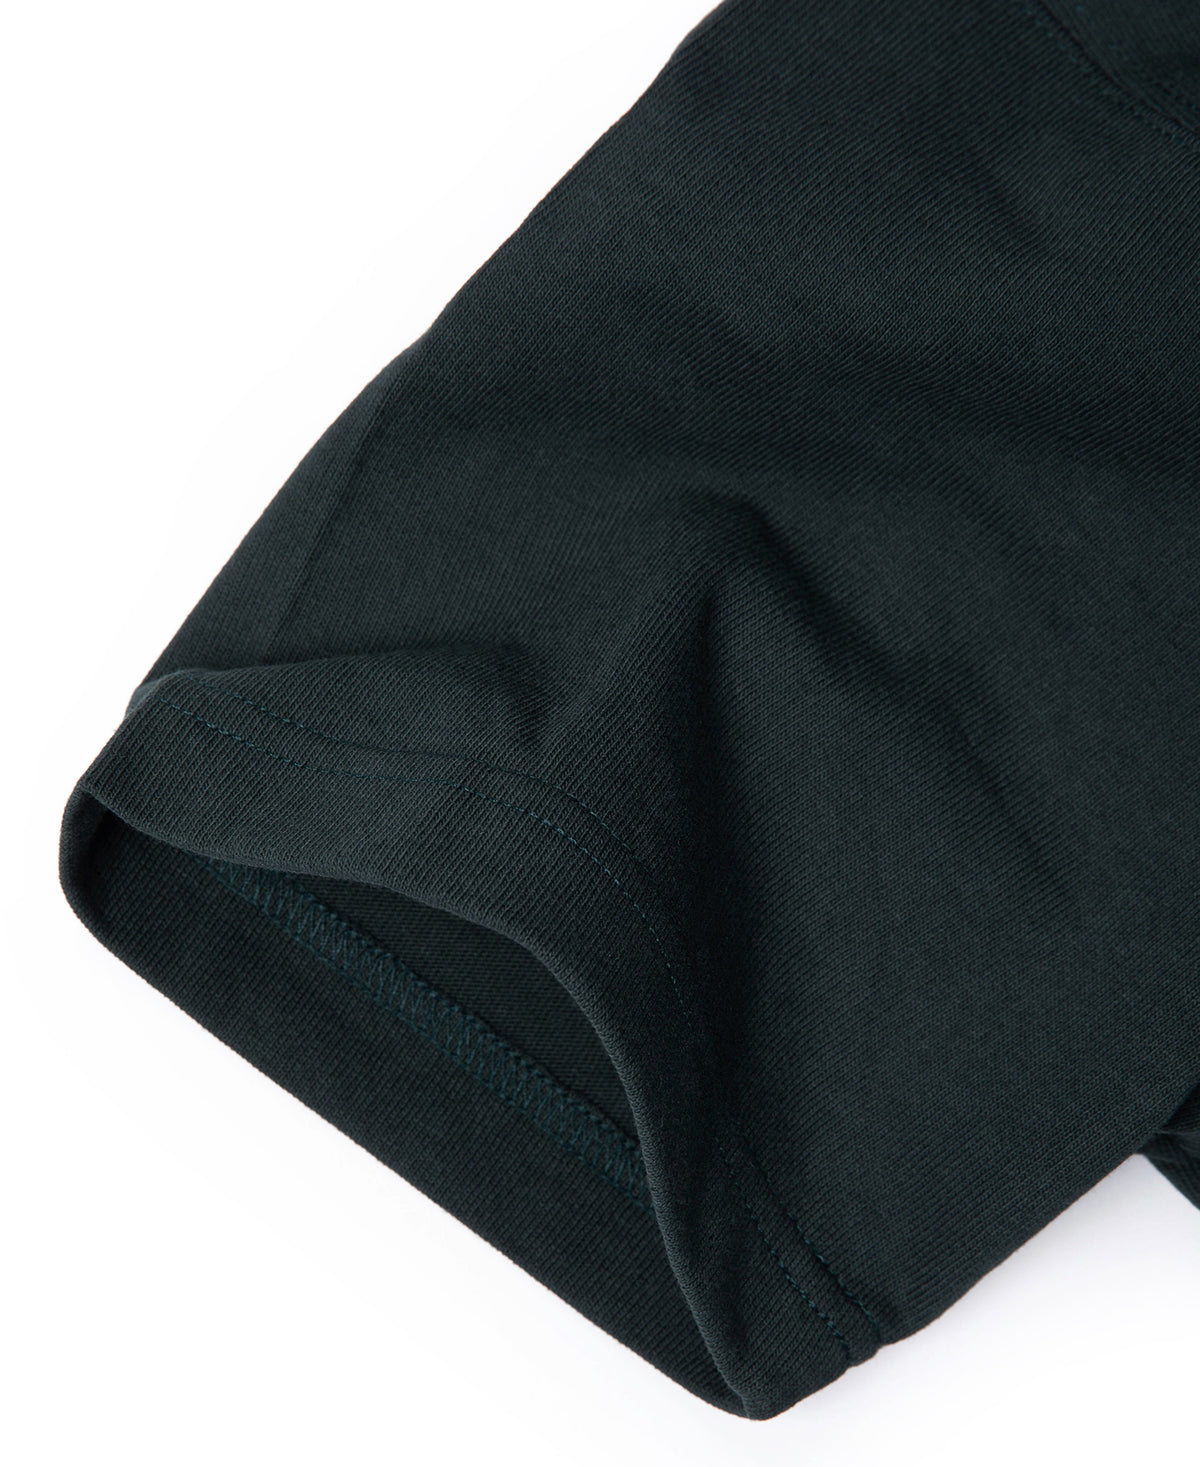 9 oz Cotton Tubular T-Shirt - Vintage Black